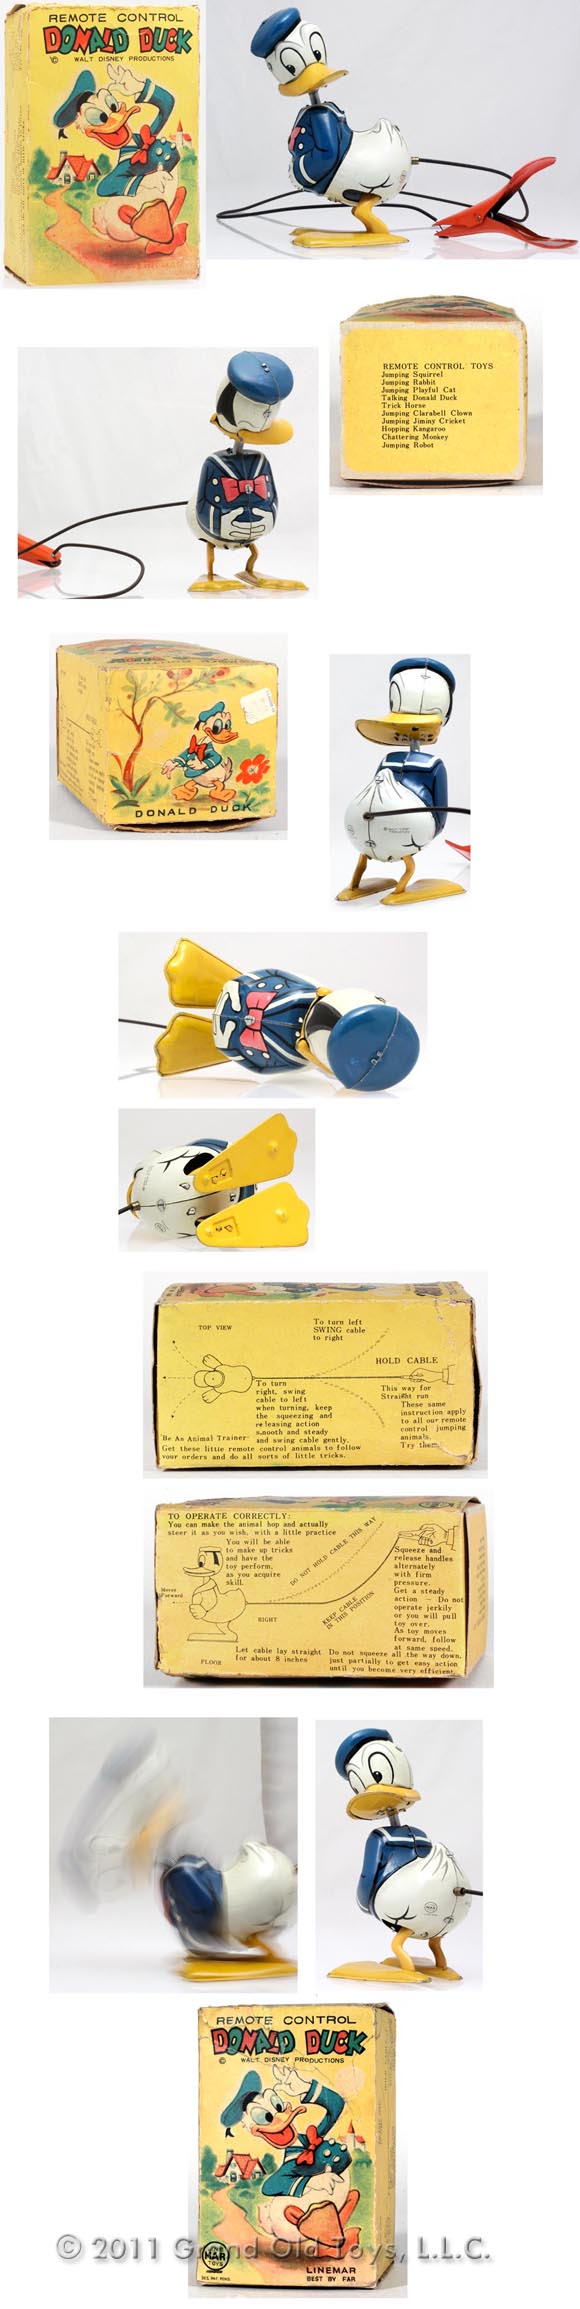 1955 Linemar Donald Duck Remote Control In Original Box